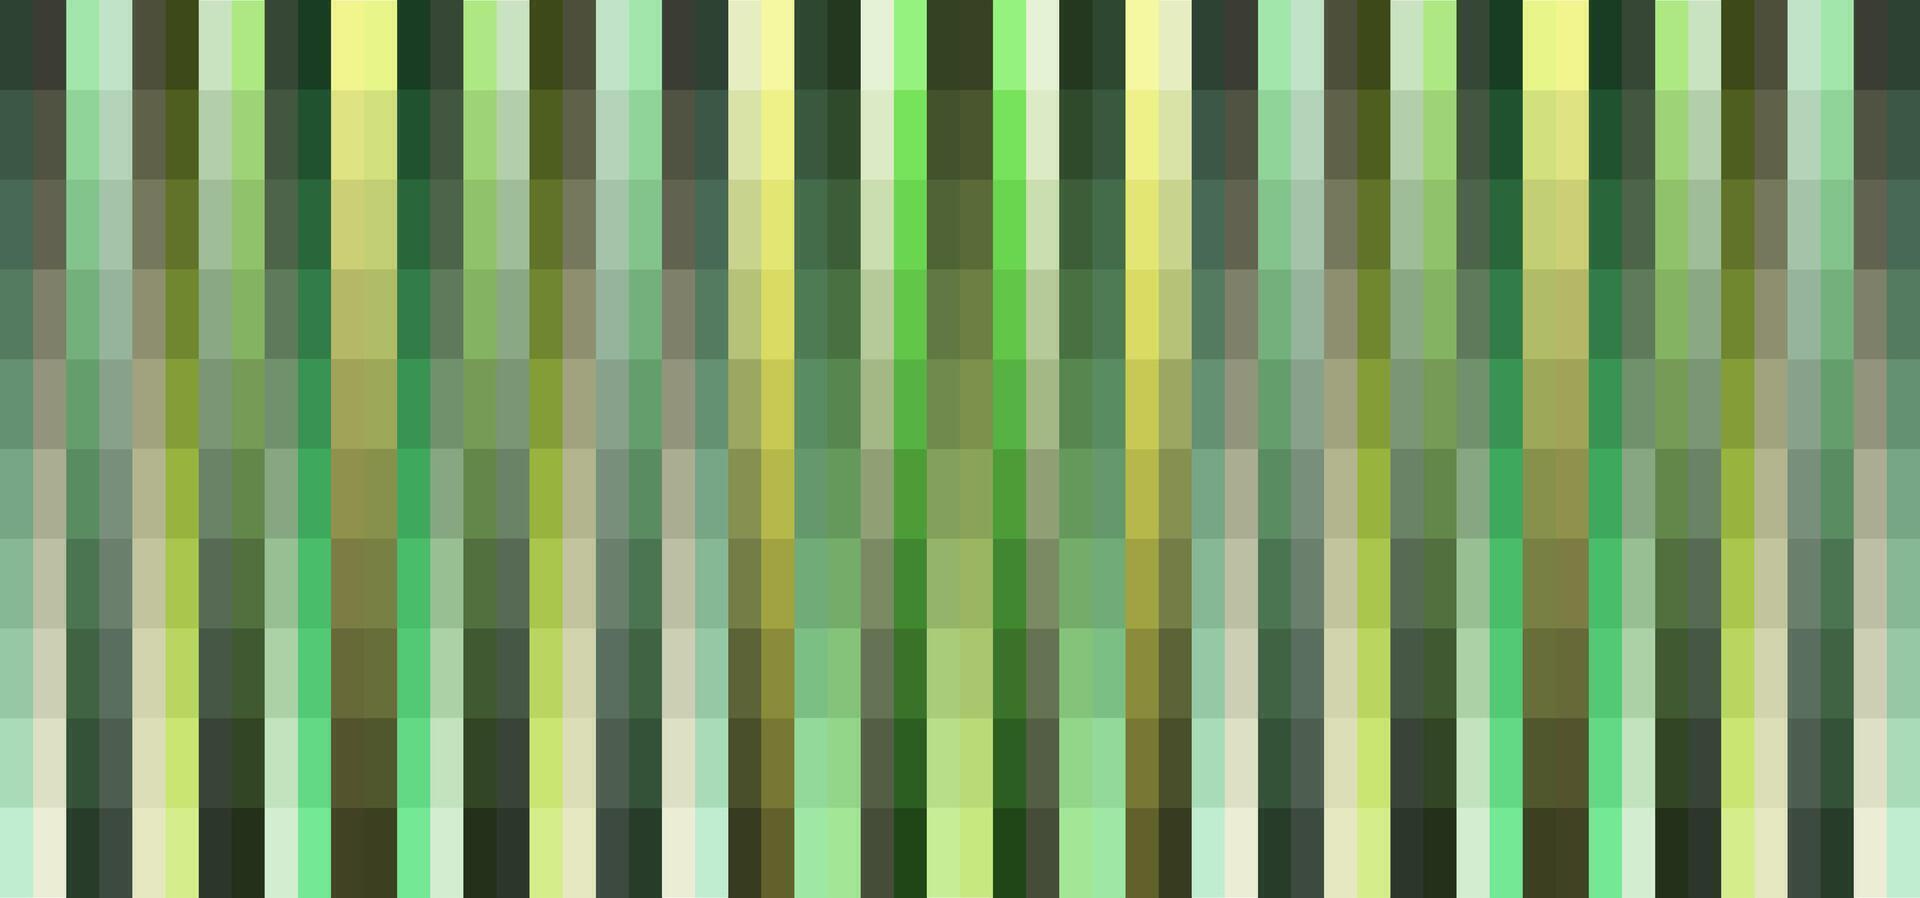 Pastel green digital pixel abstract background vector